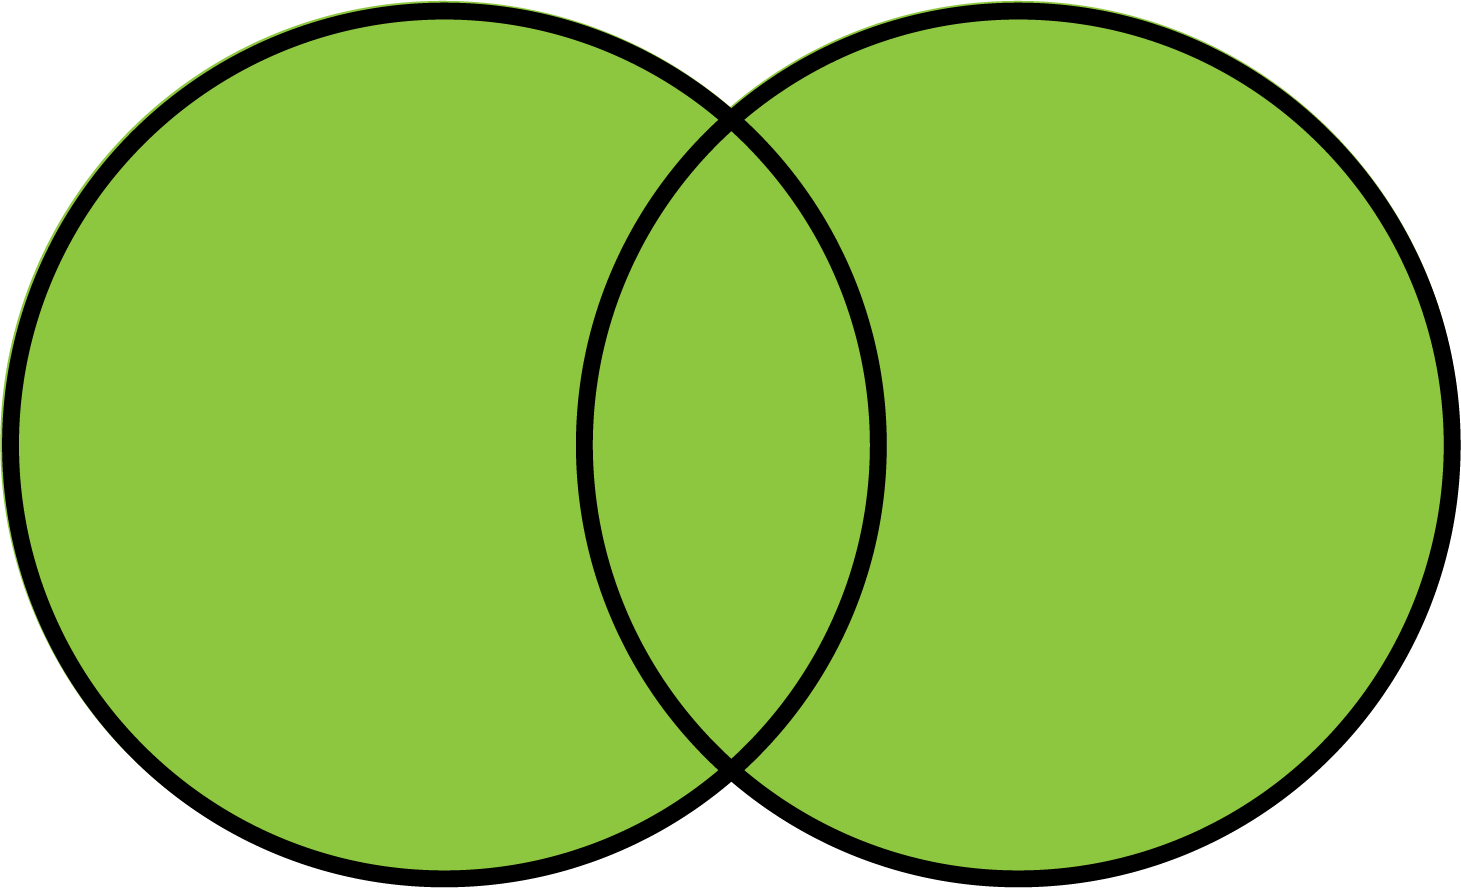 Venn diagram with both circles filled